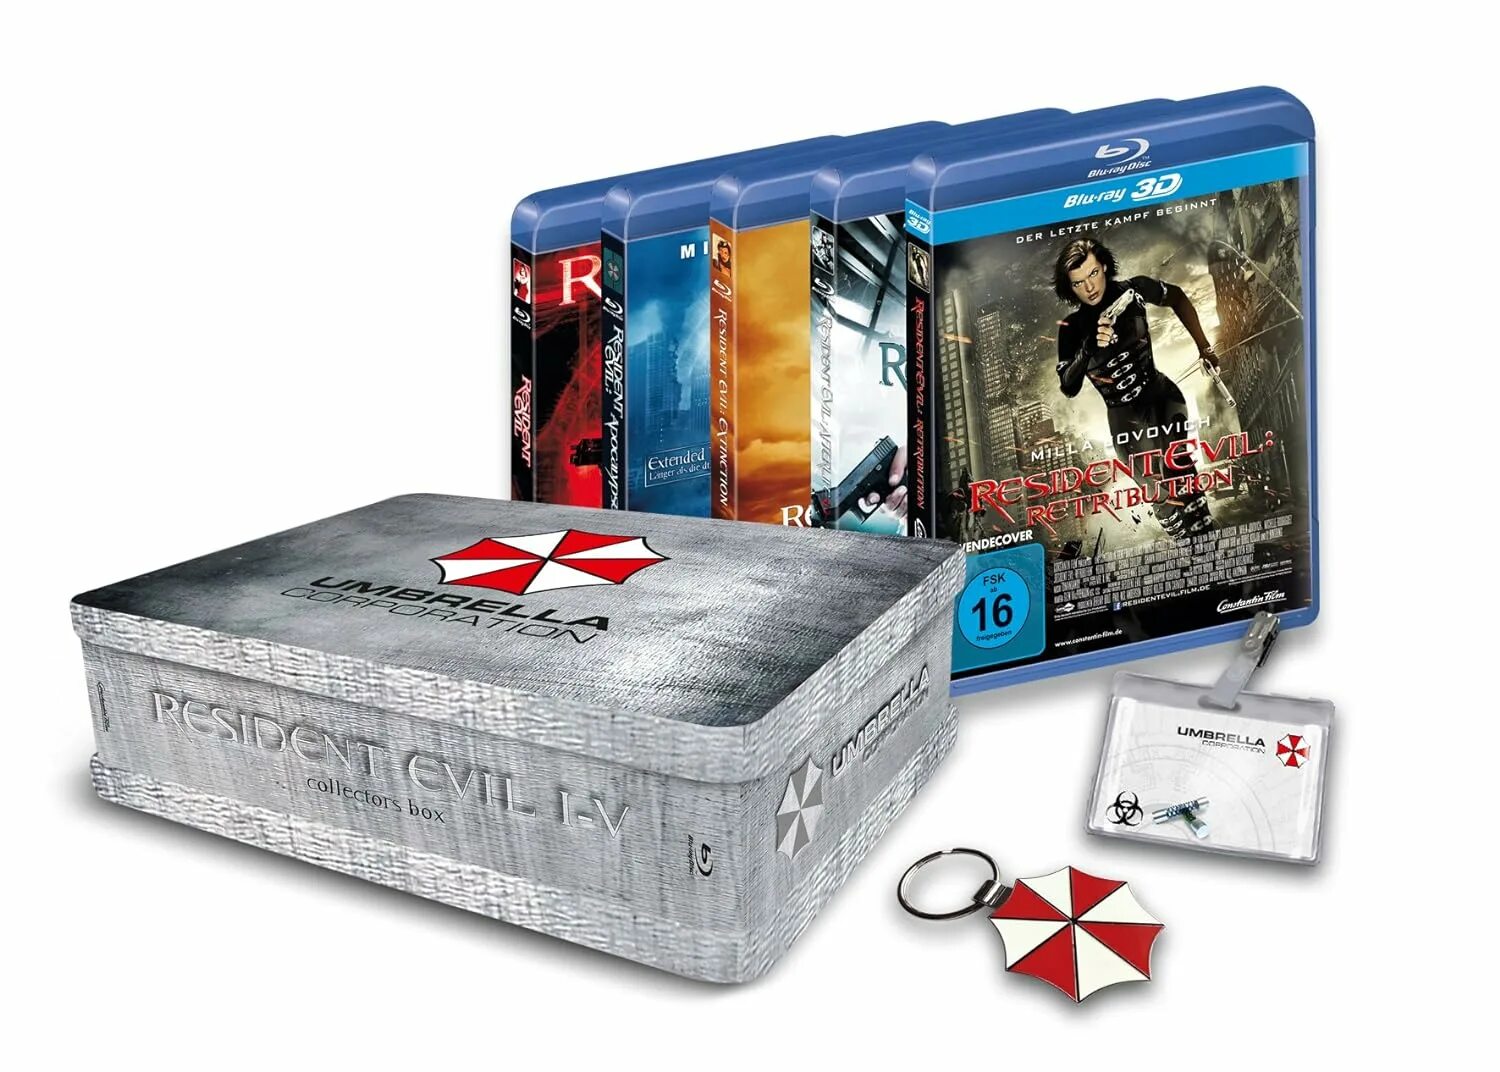 Resident evil collection. Resident Evil 5 коллекционное издание. Коллекционное издание Resident Evil 4. Коллекционка Resident Evil 1. Коллекционное издание Resident Evil 4 2005.